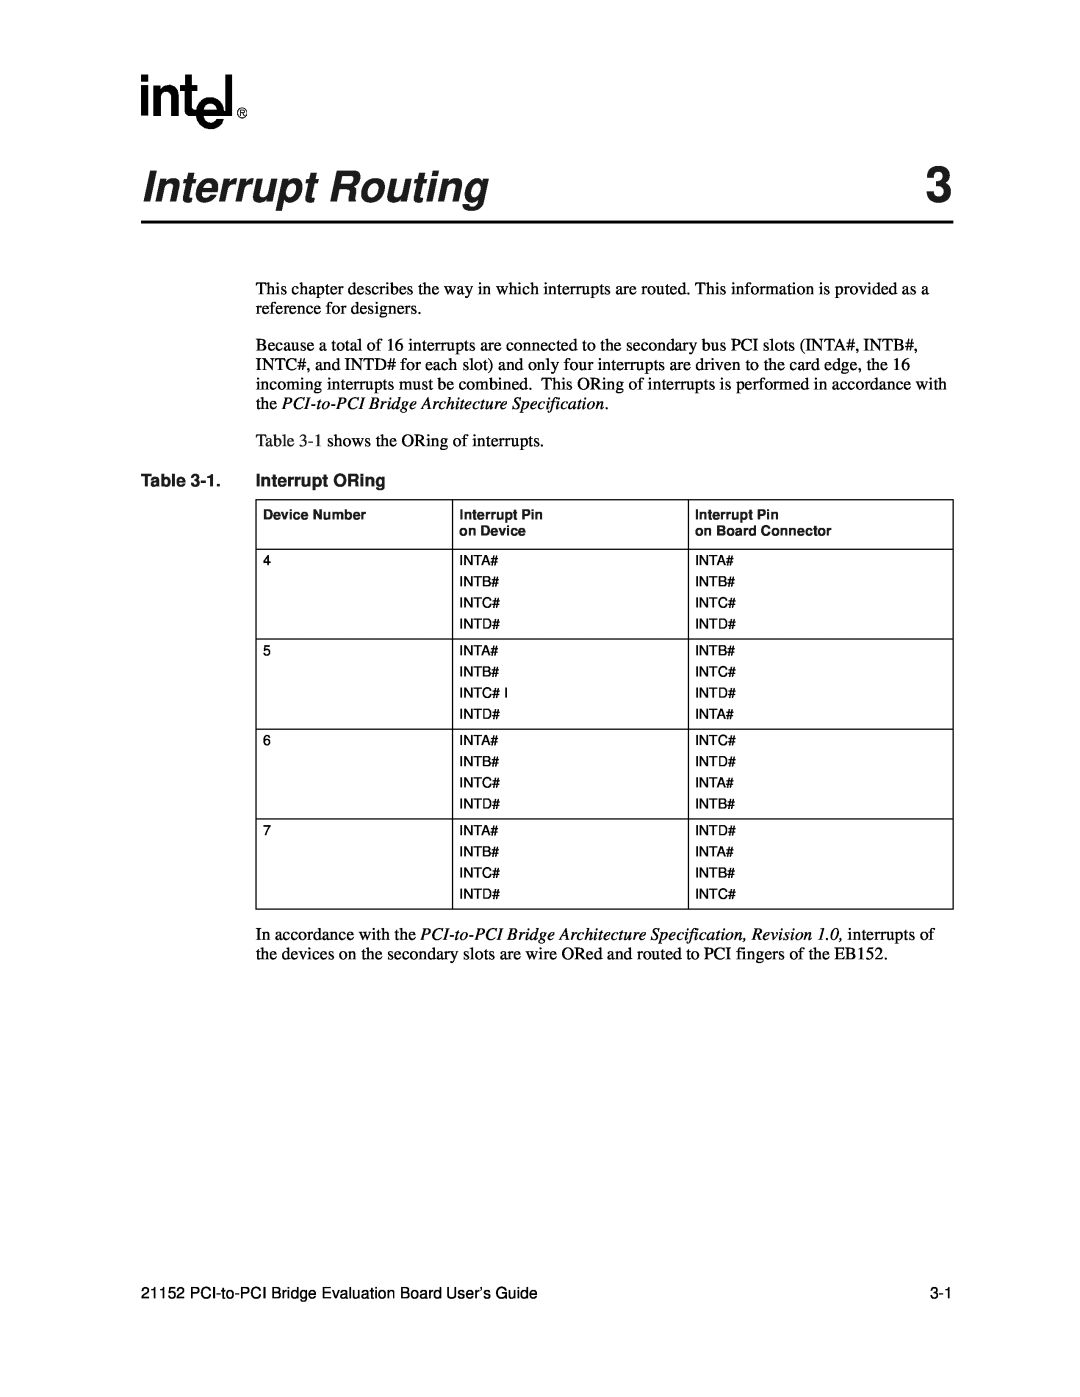 Intel 21152 manual Interrupt Routing, Interrupt ORing 